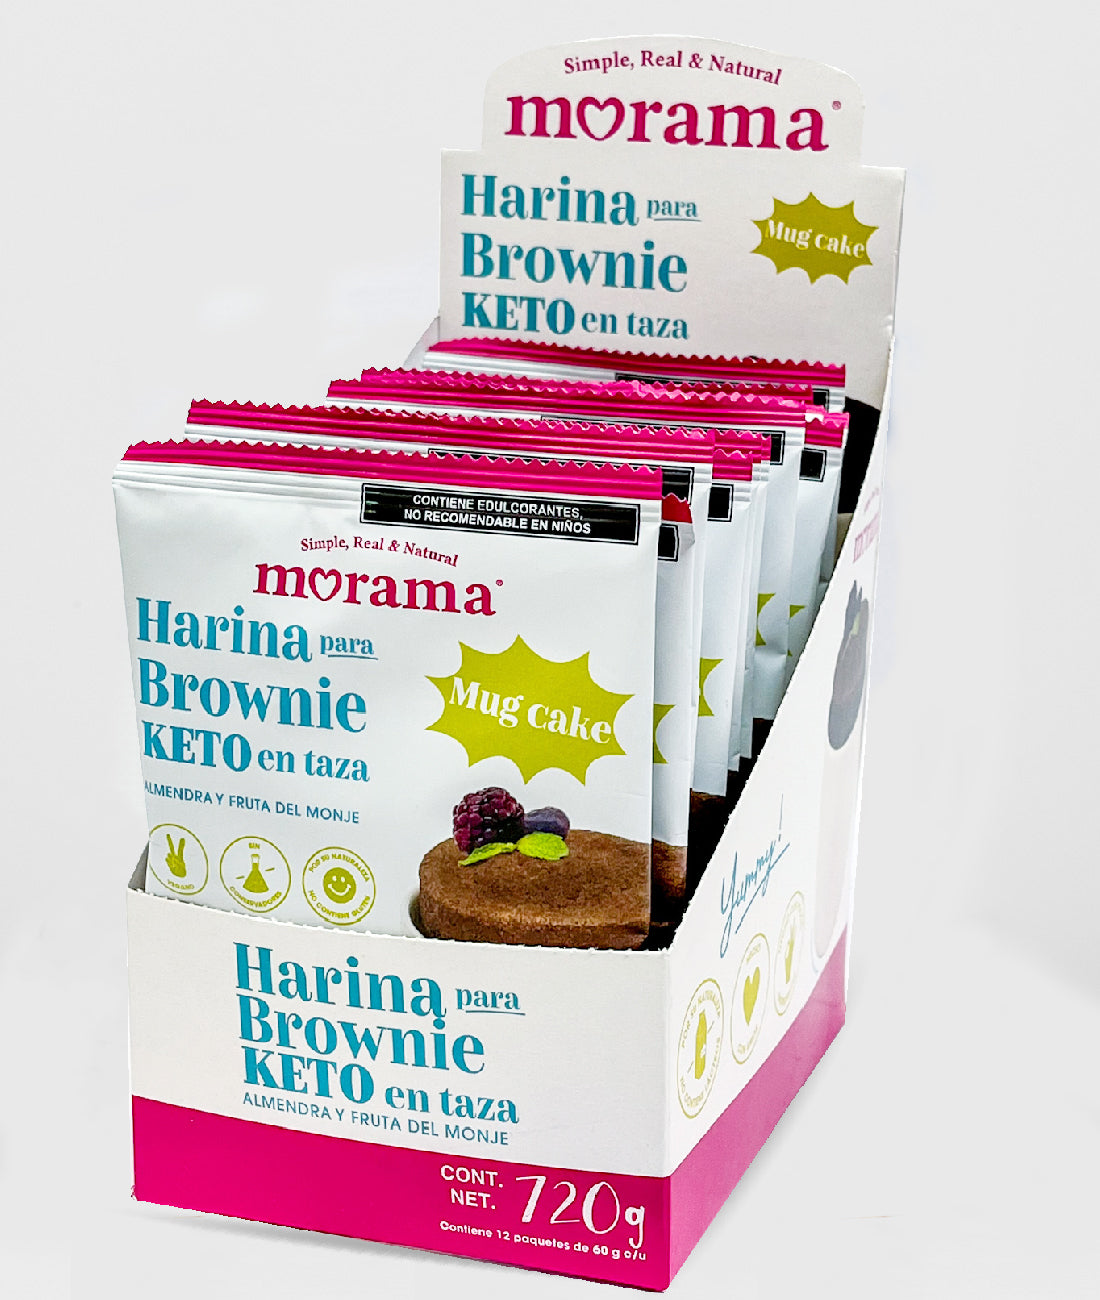 Harina para Brownies KETO (Mug Cake) 12 pack de 60 g